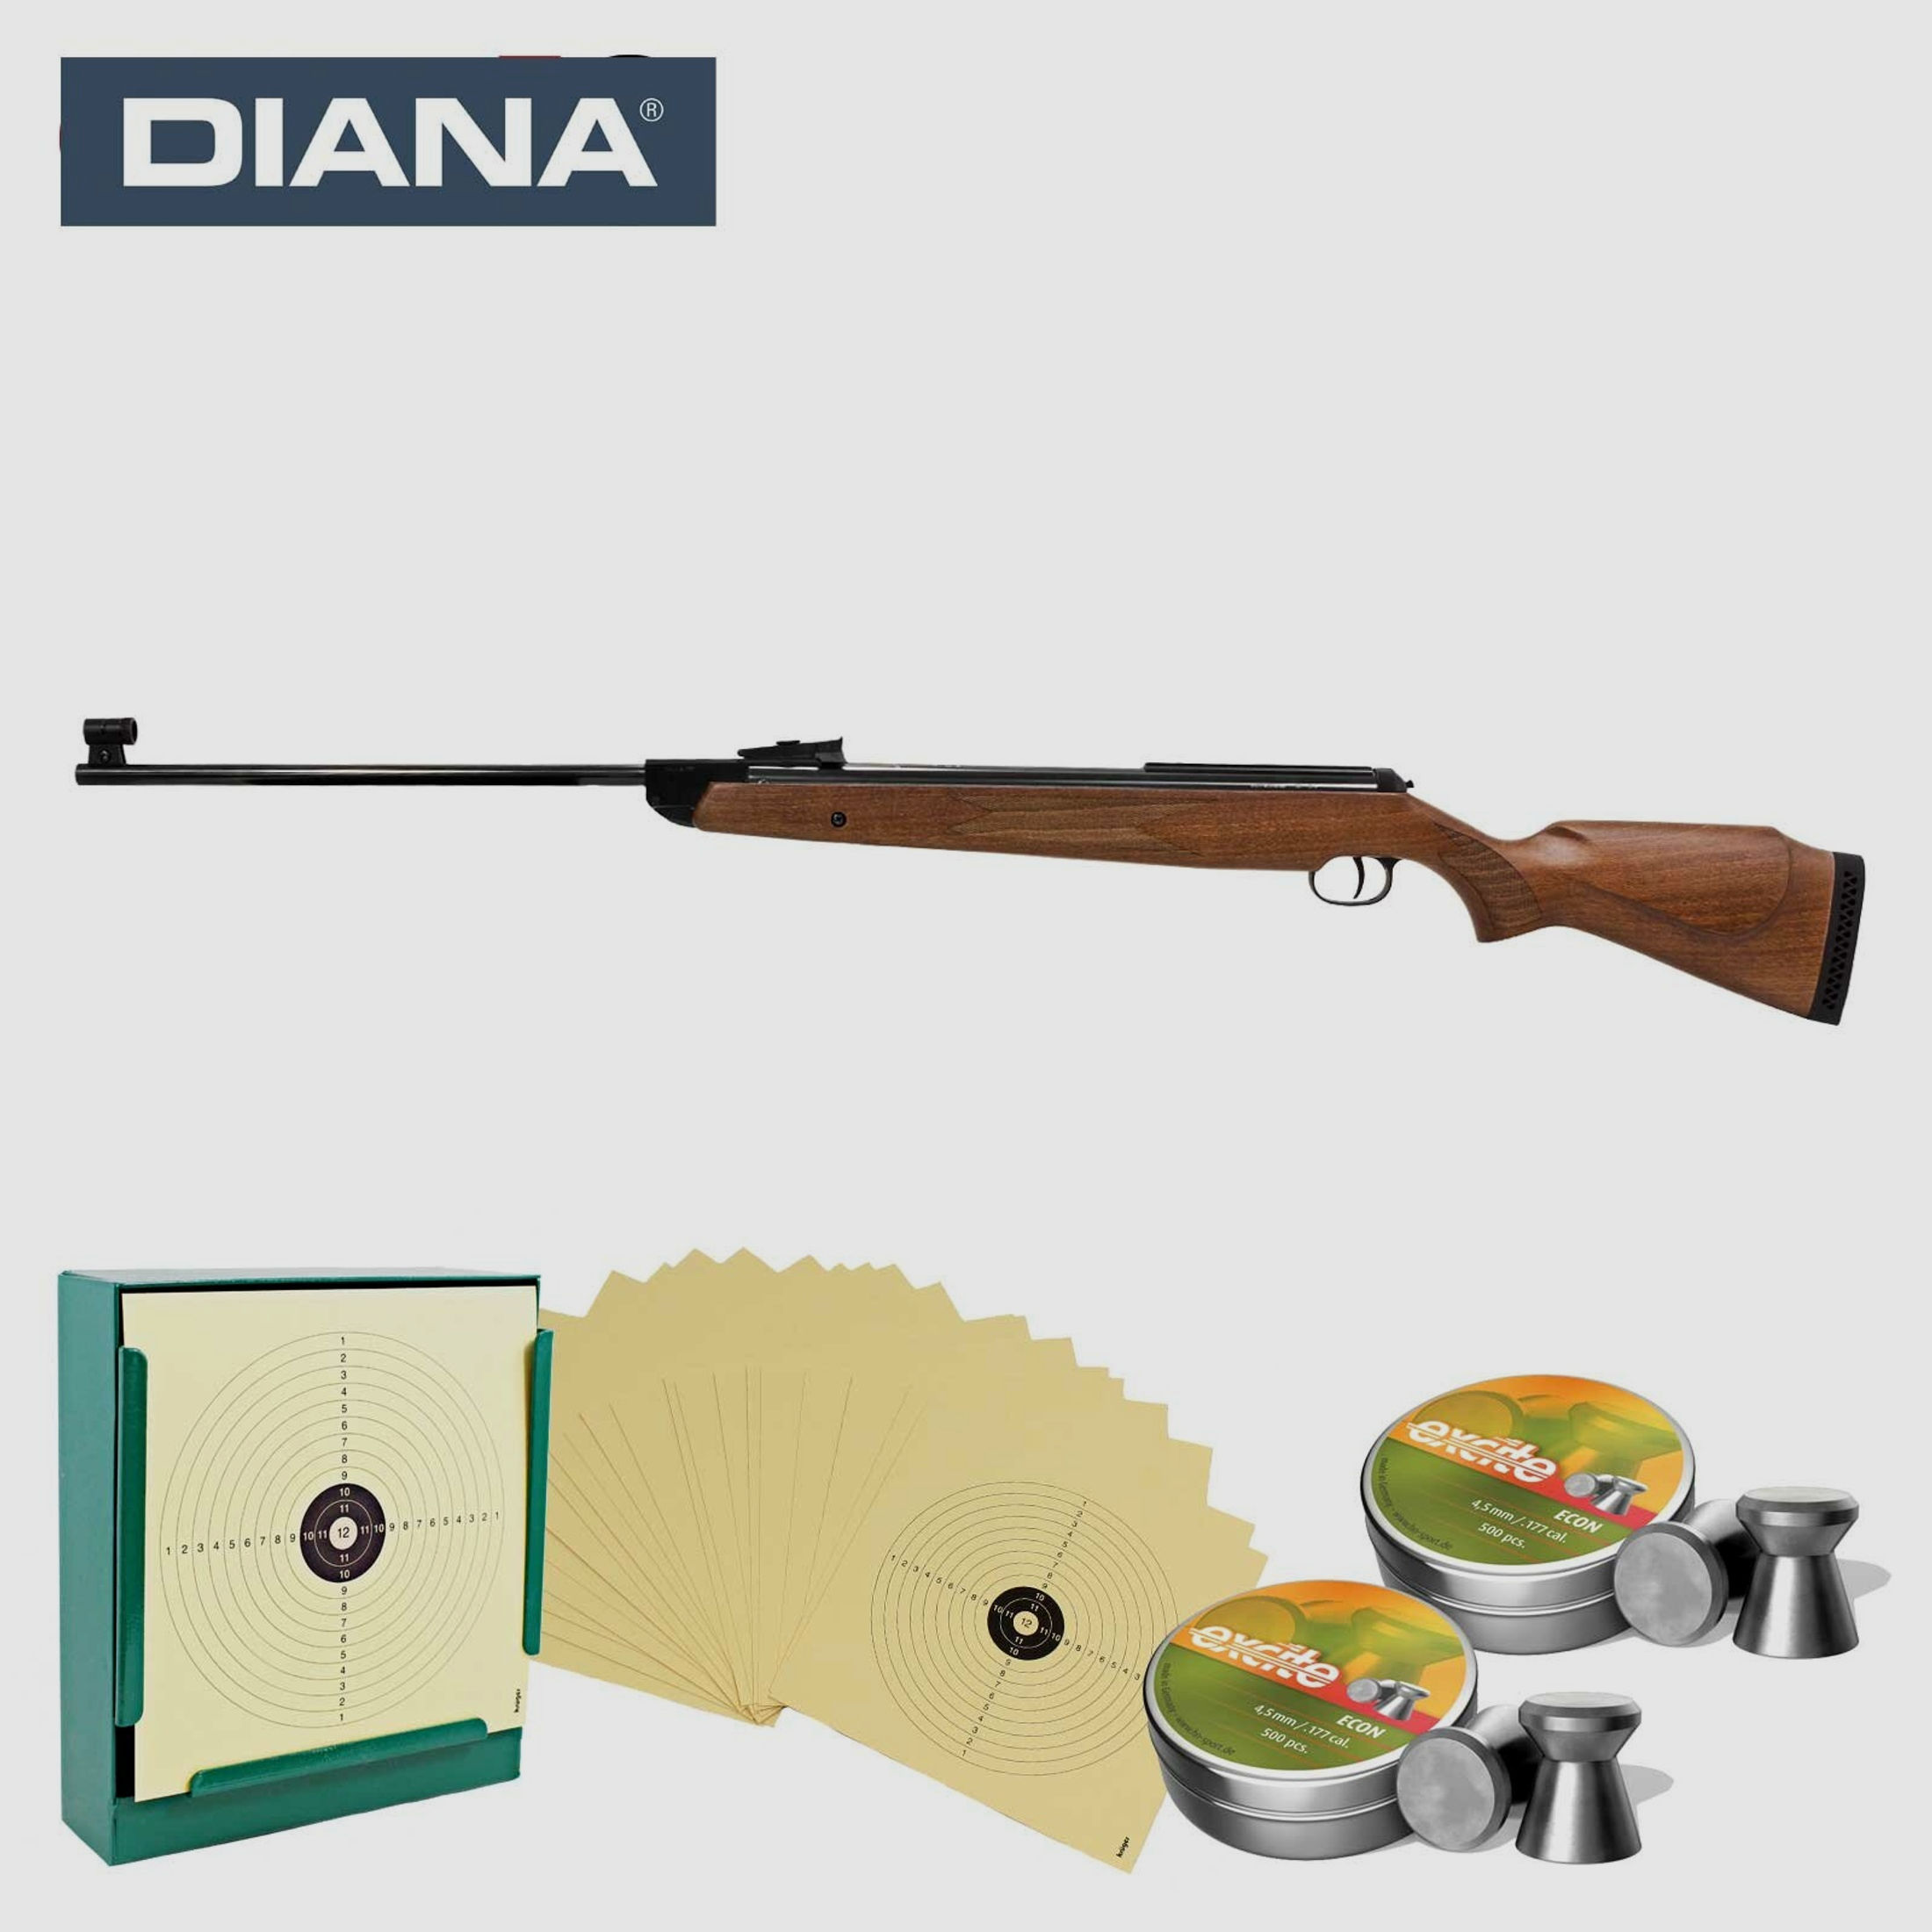 SET Diana Knicklauf Luftgewehr 350 Magnum Kaliber 4,5 mm Diabolo (P18) + 1000 Diabolos + 100 Scheiben + Kugelfang